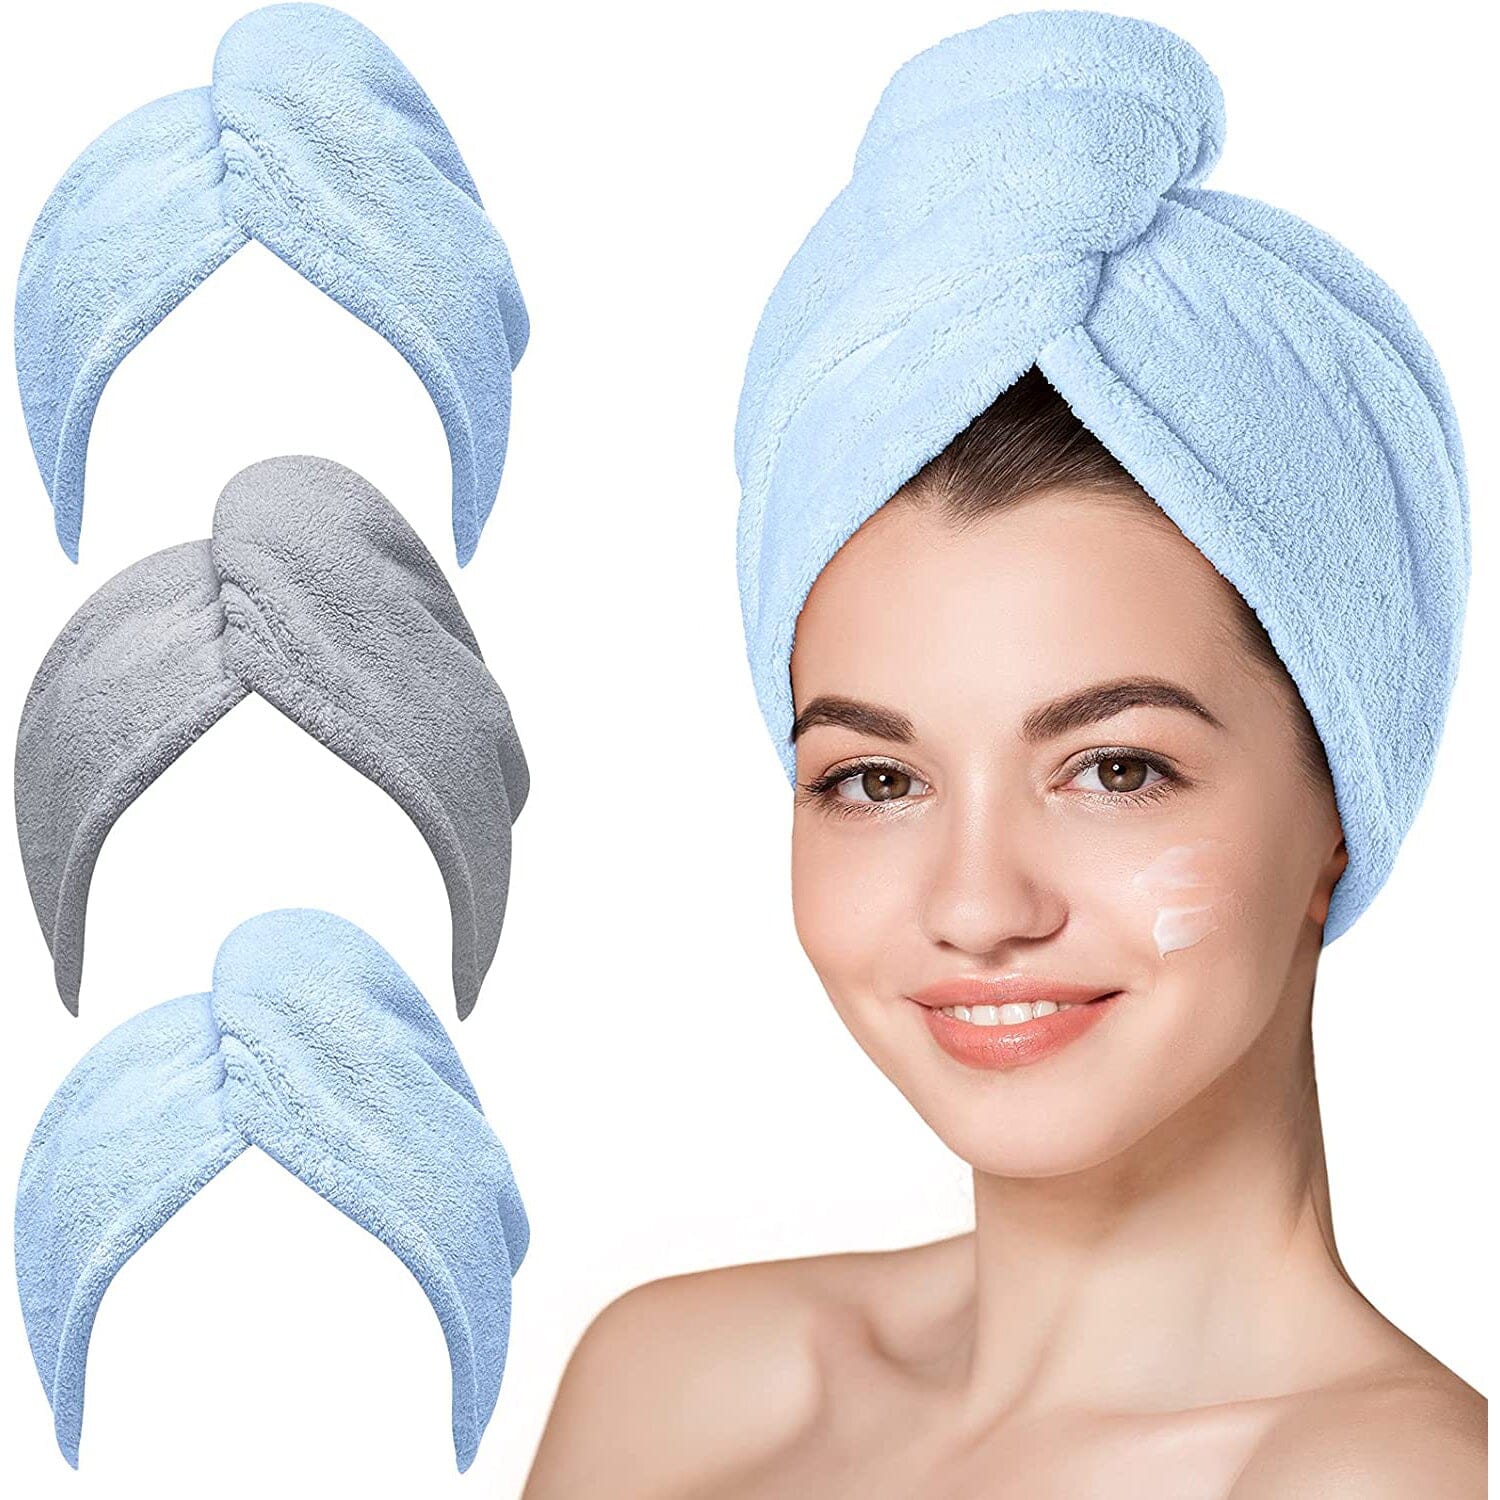 3-Pack: Hicober Microfiber Hair Towel